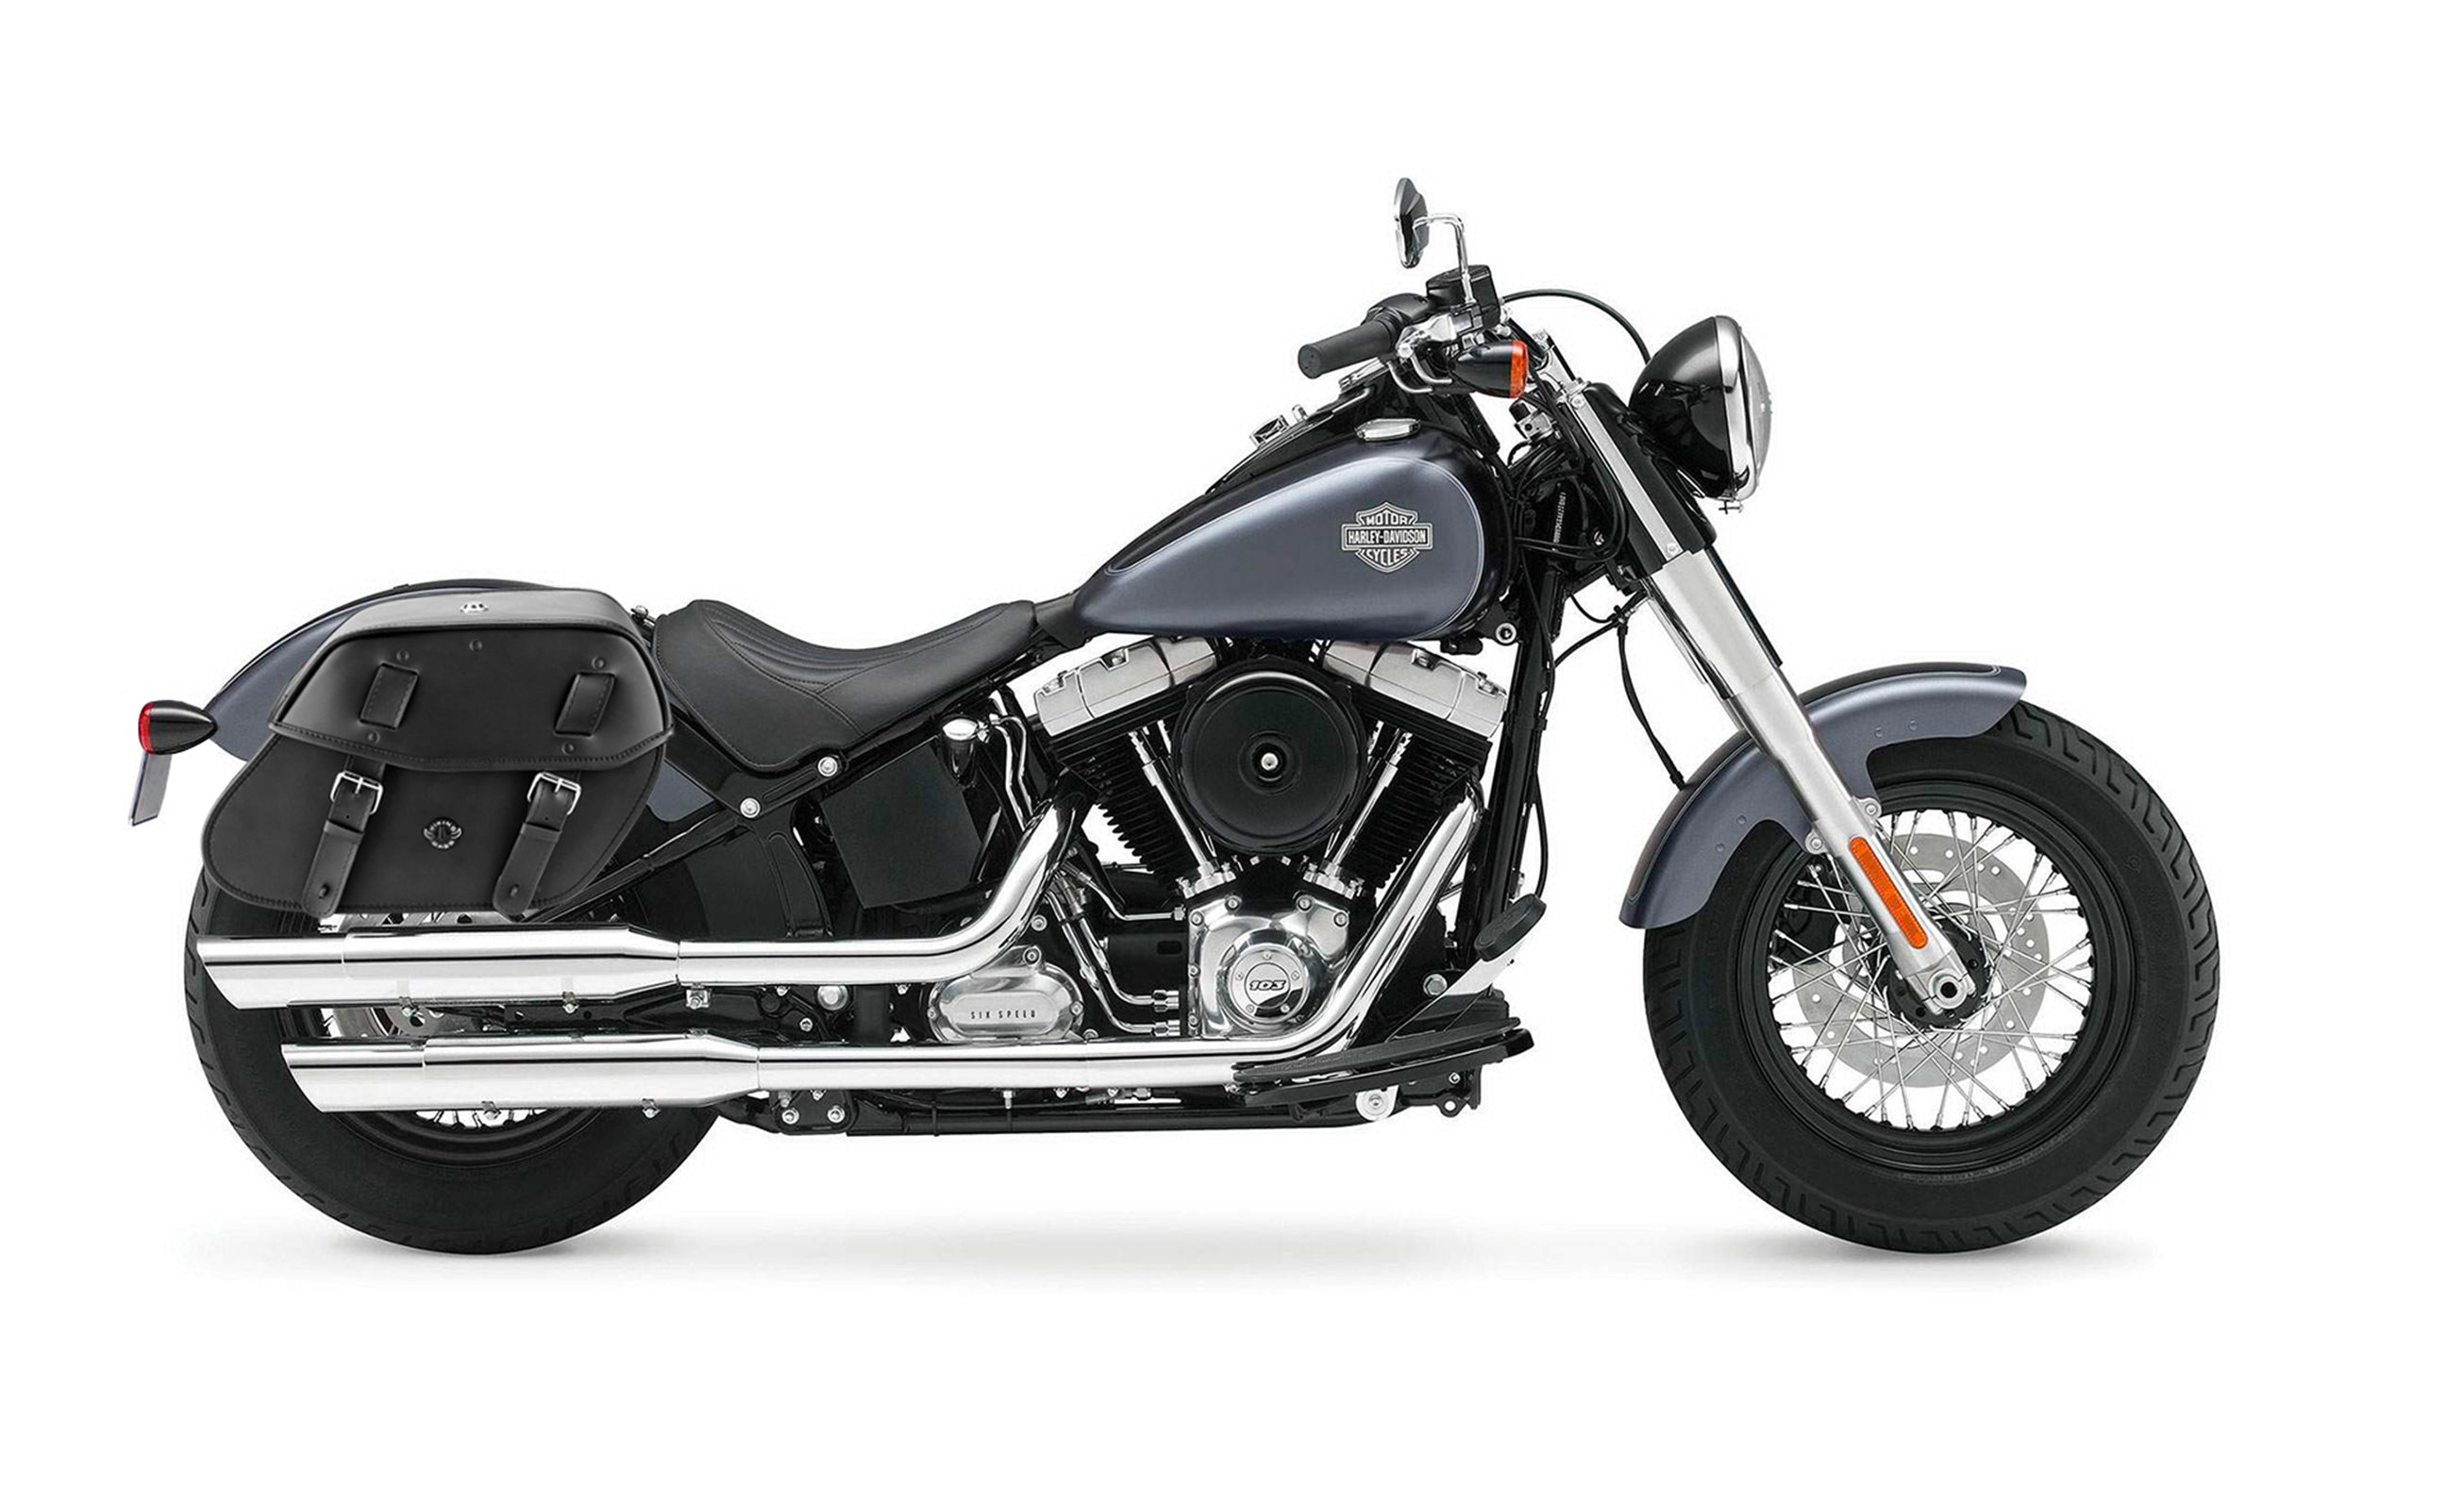 24L - Odin Large Leather Motorcycle Saddlebags for Harley Softail Slim FLS on Bike Photo @expand